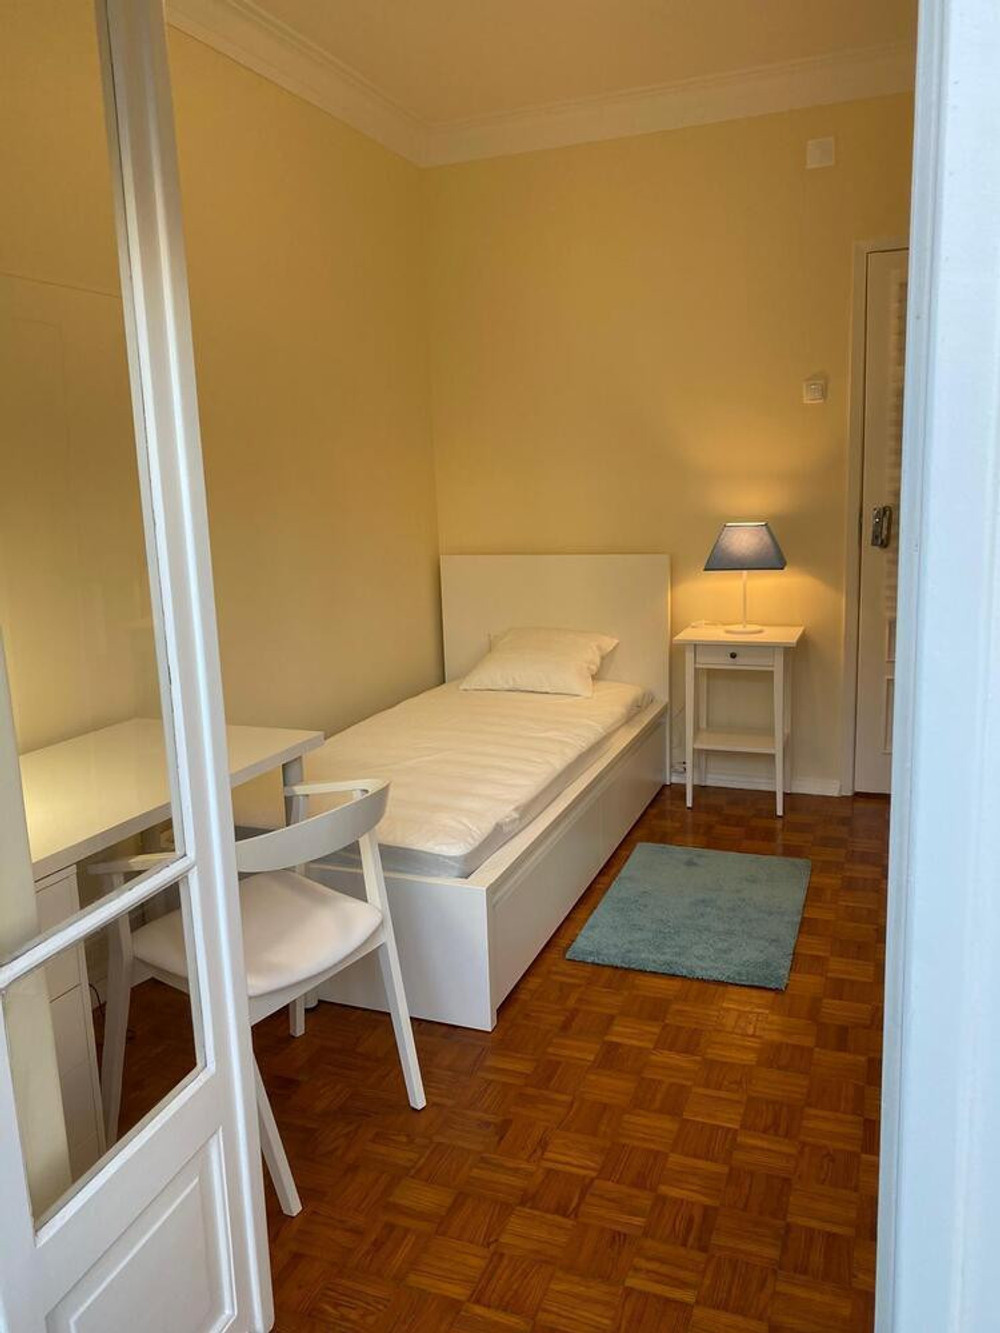 Maria Alice 2: Cosy Bedroom with private balcony